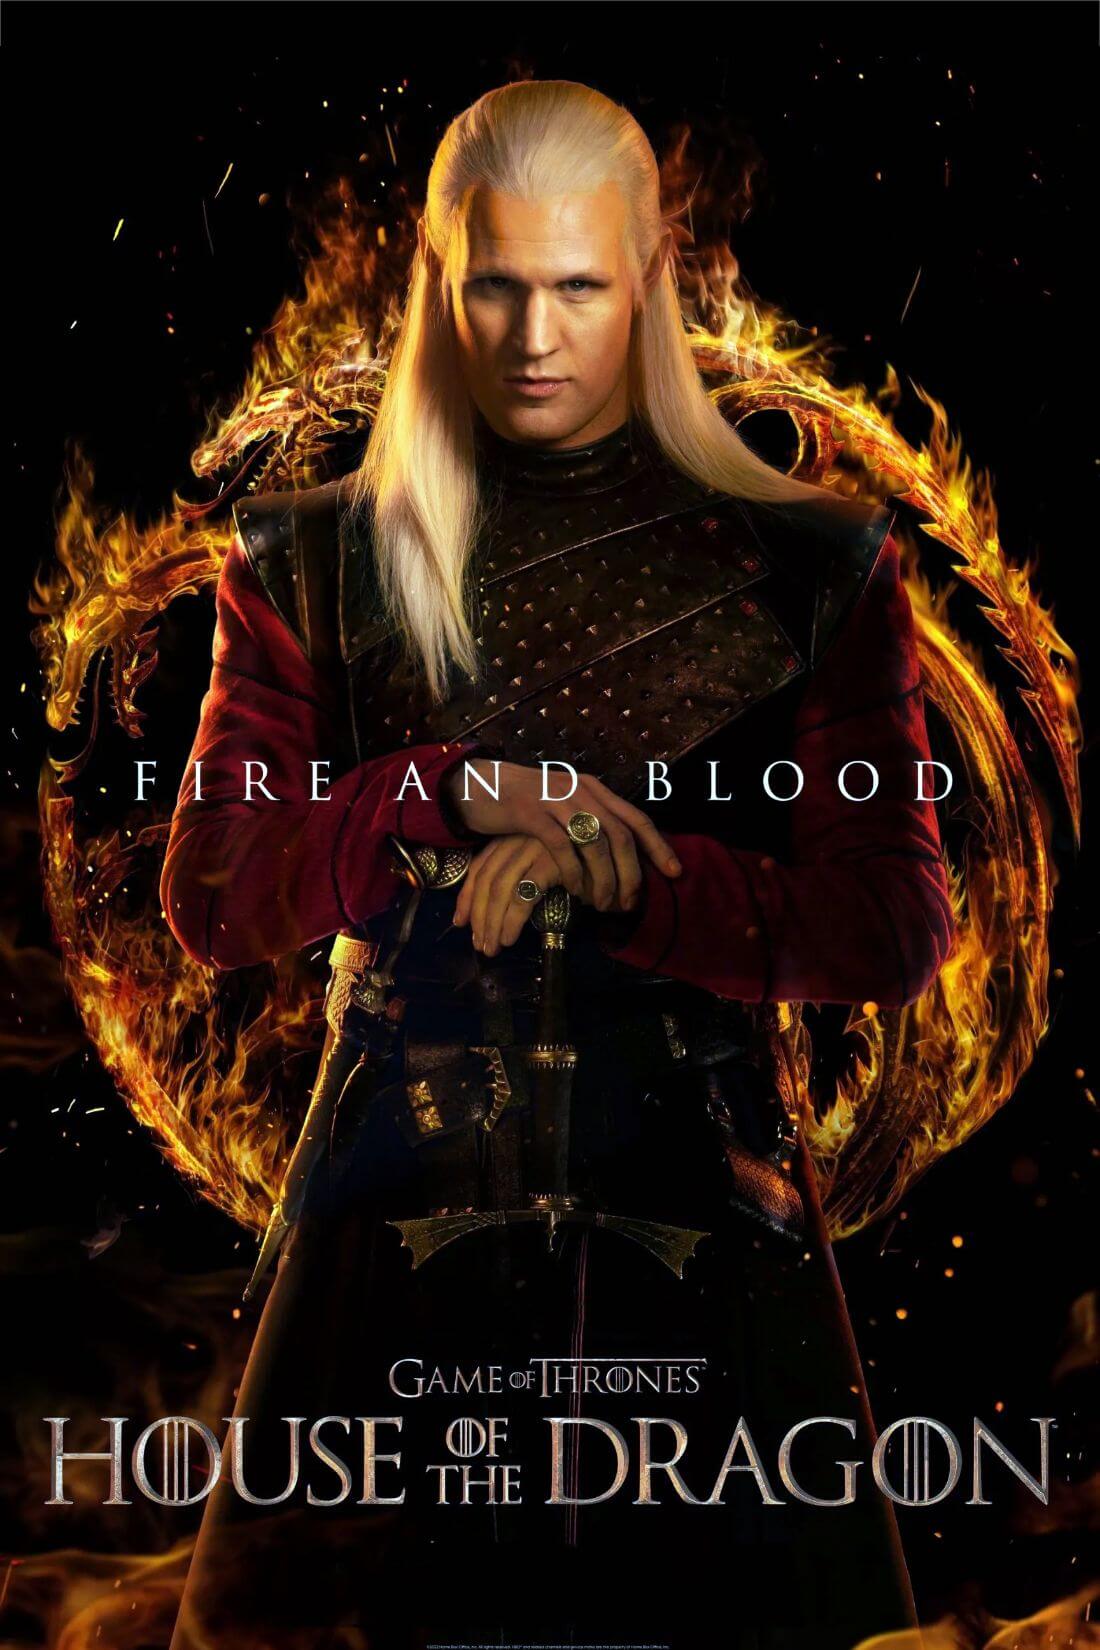 Game of Thrones Fire & Blood Targaryen Logo Giclee